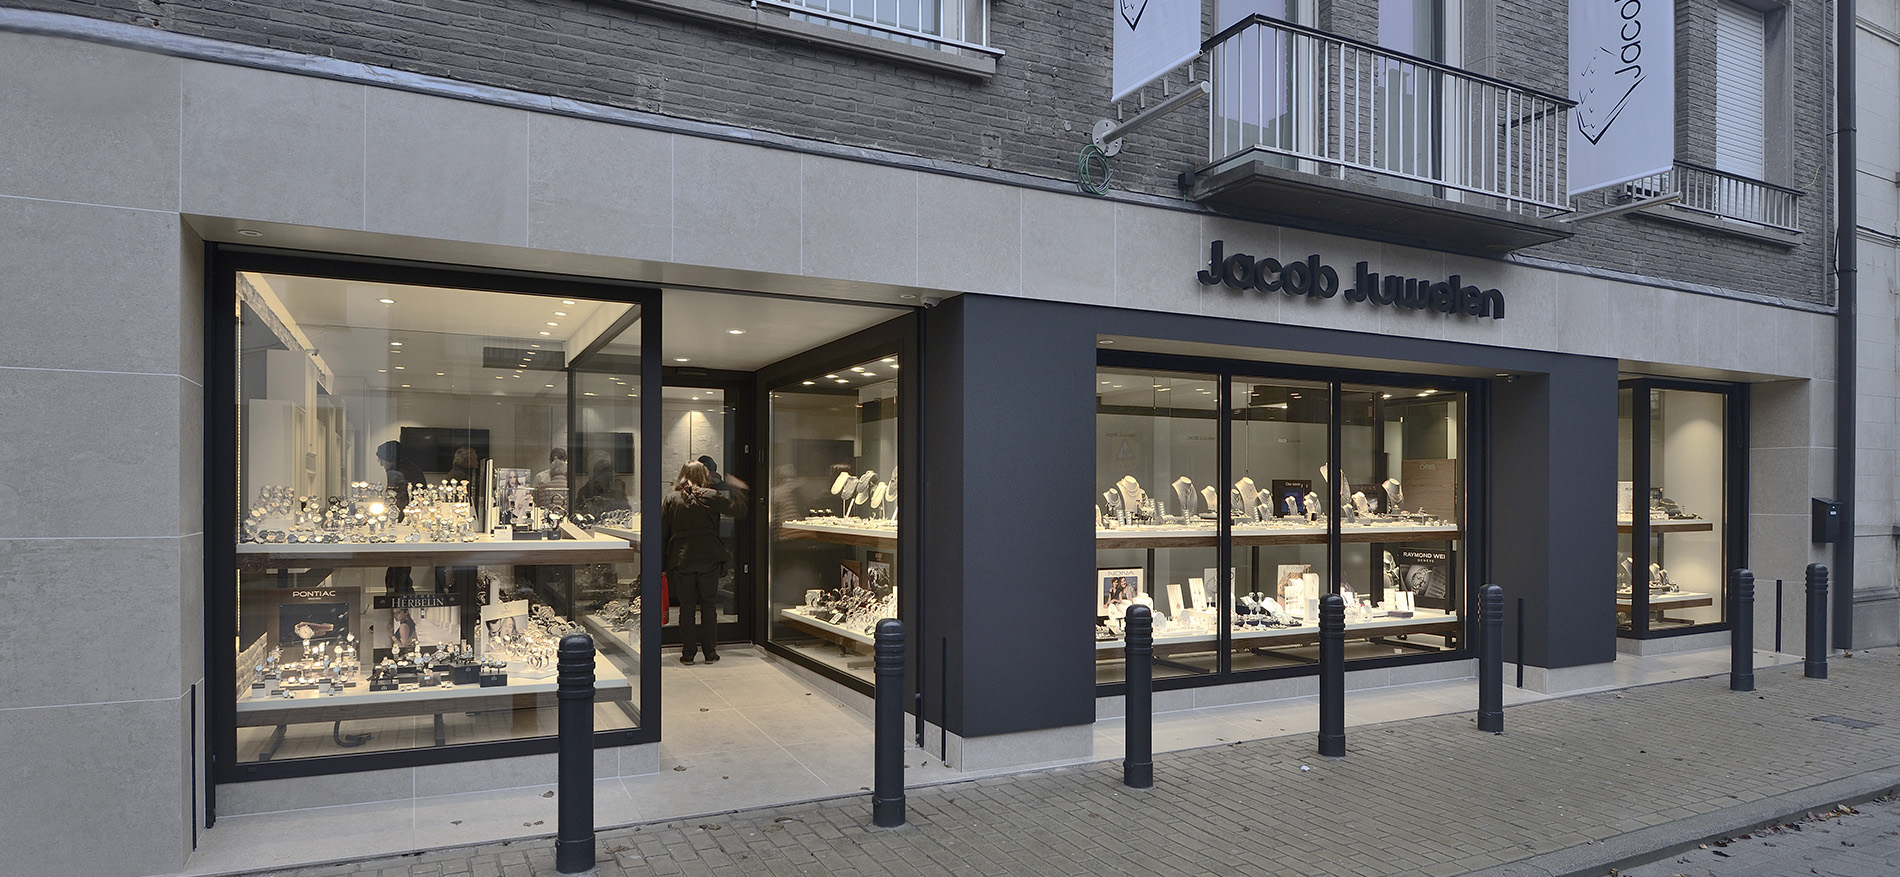 Jacob Juwelen – Lebbeke: Shop design met allure - Juweliers